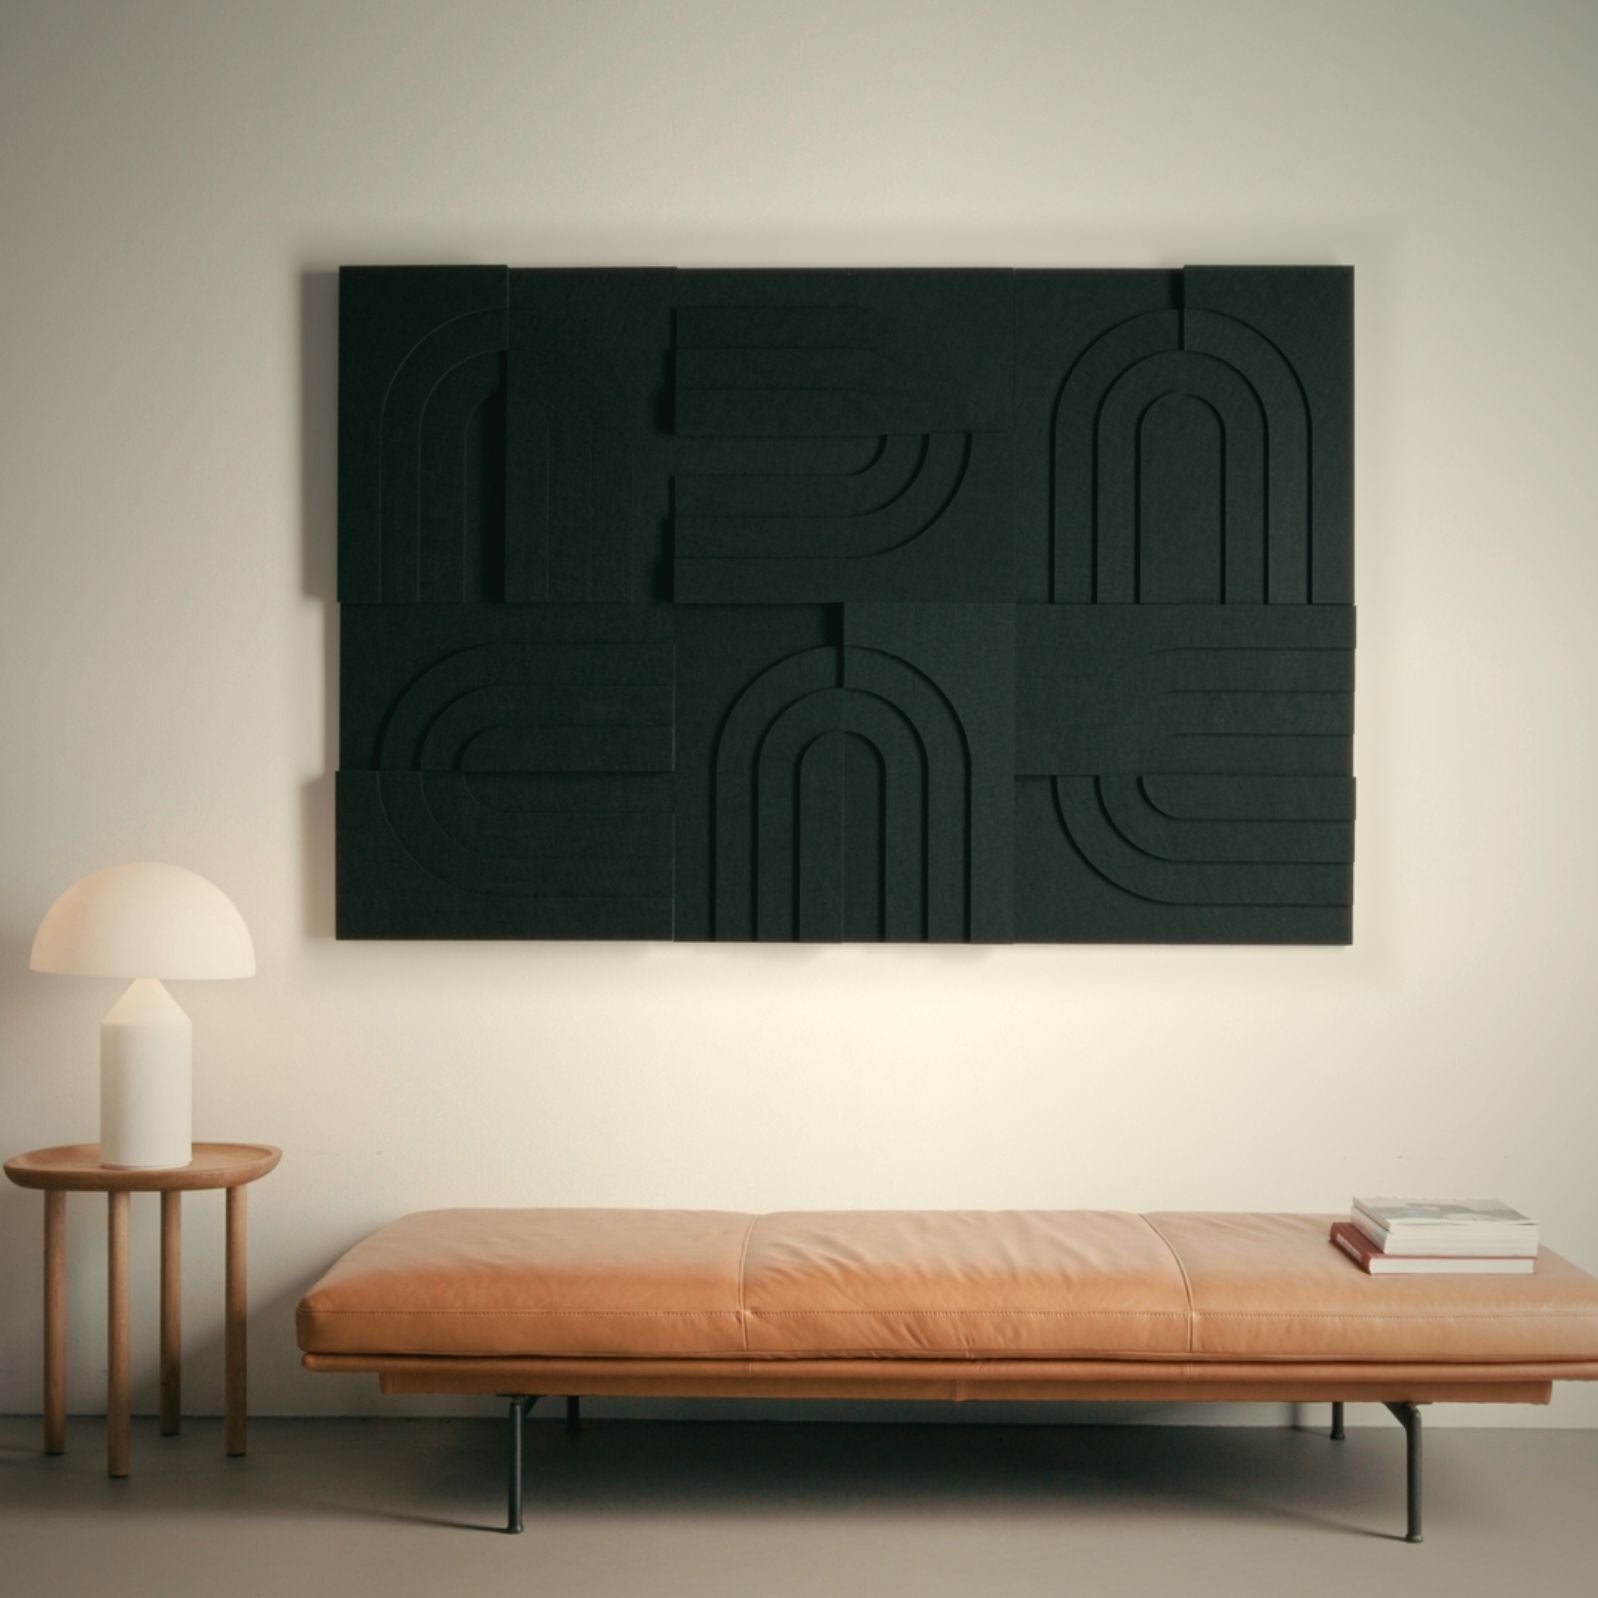 Optimize Living Room Acoustics with Arturel's series in black